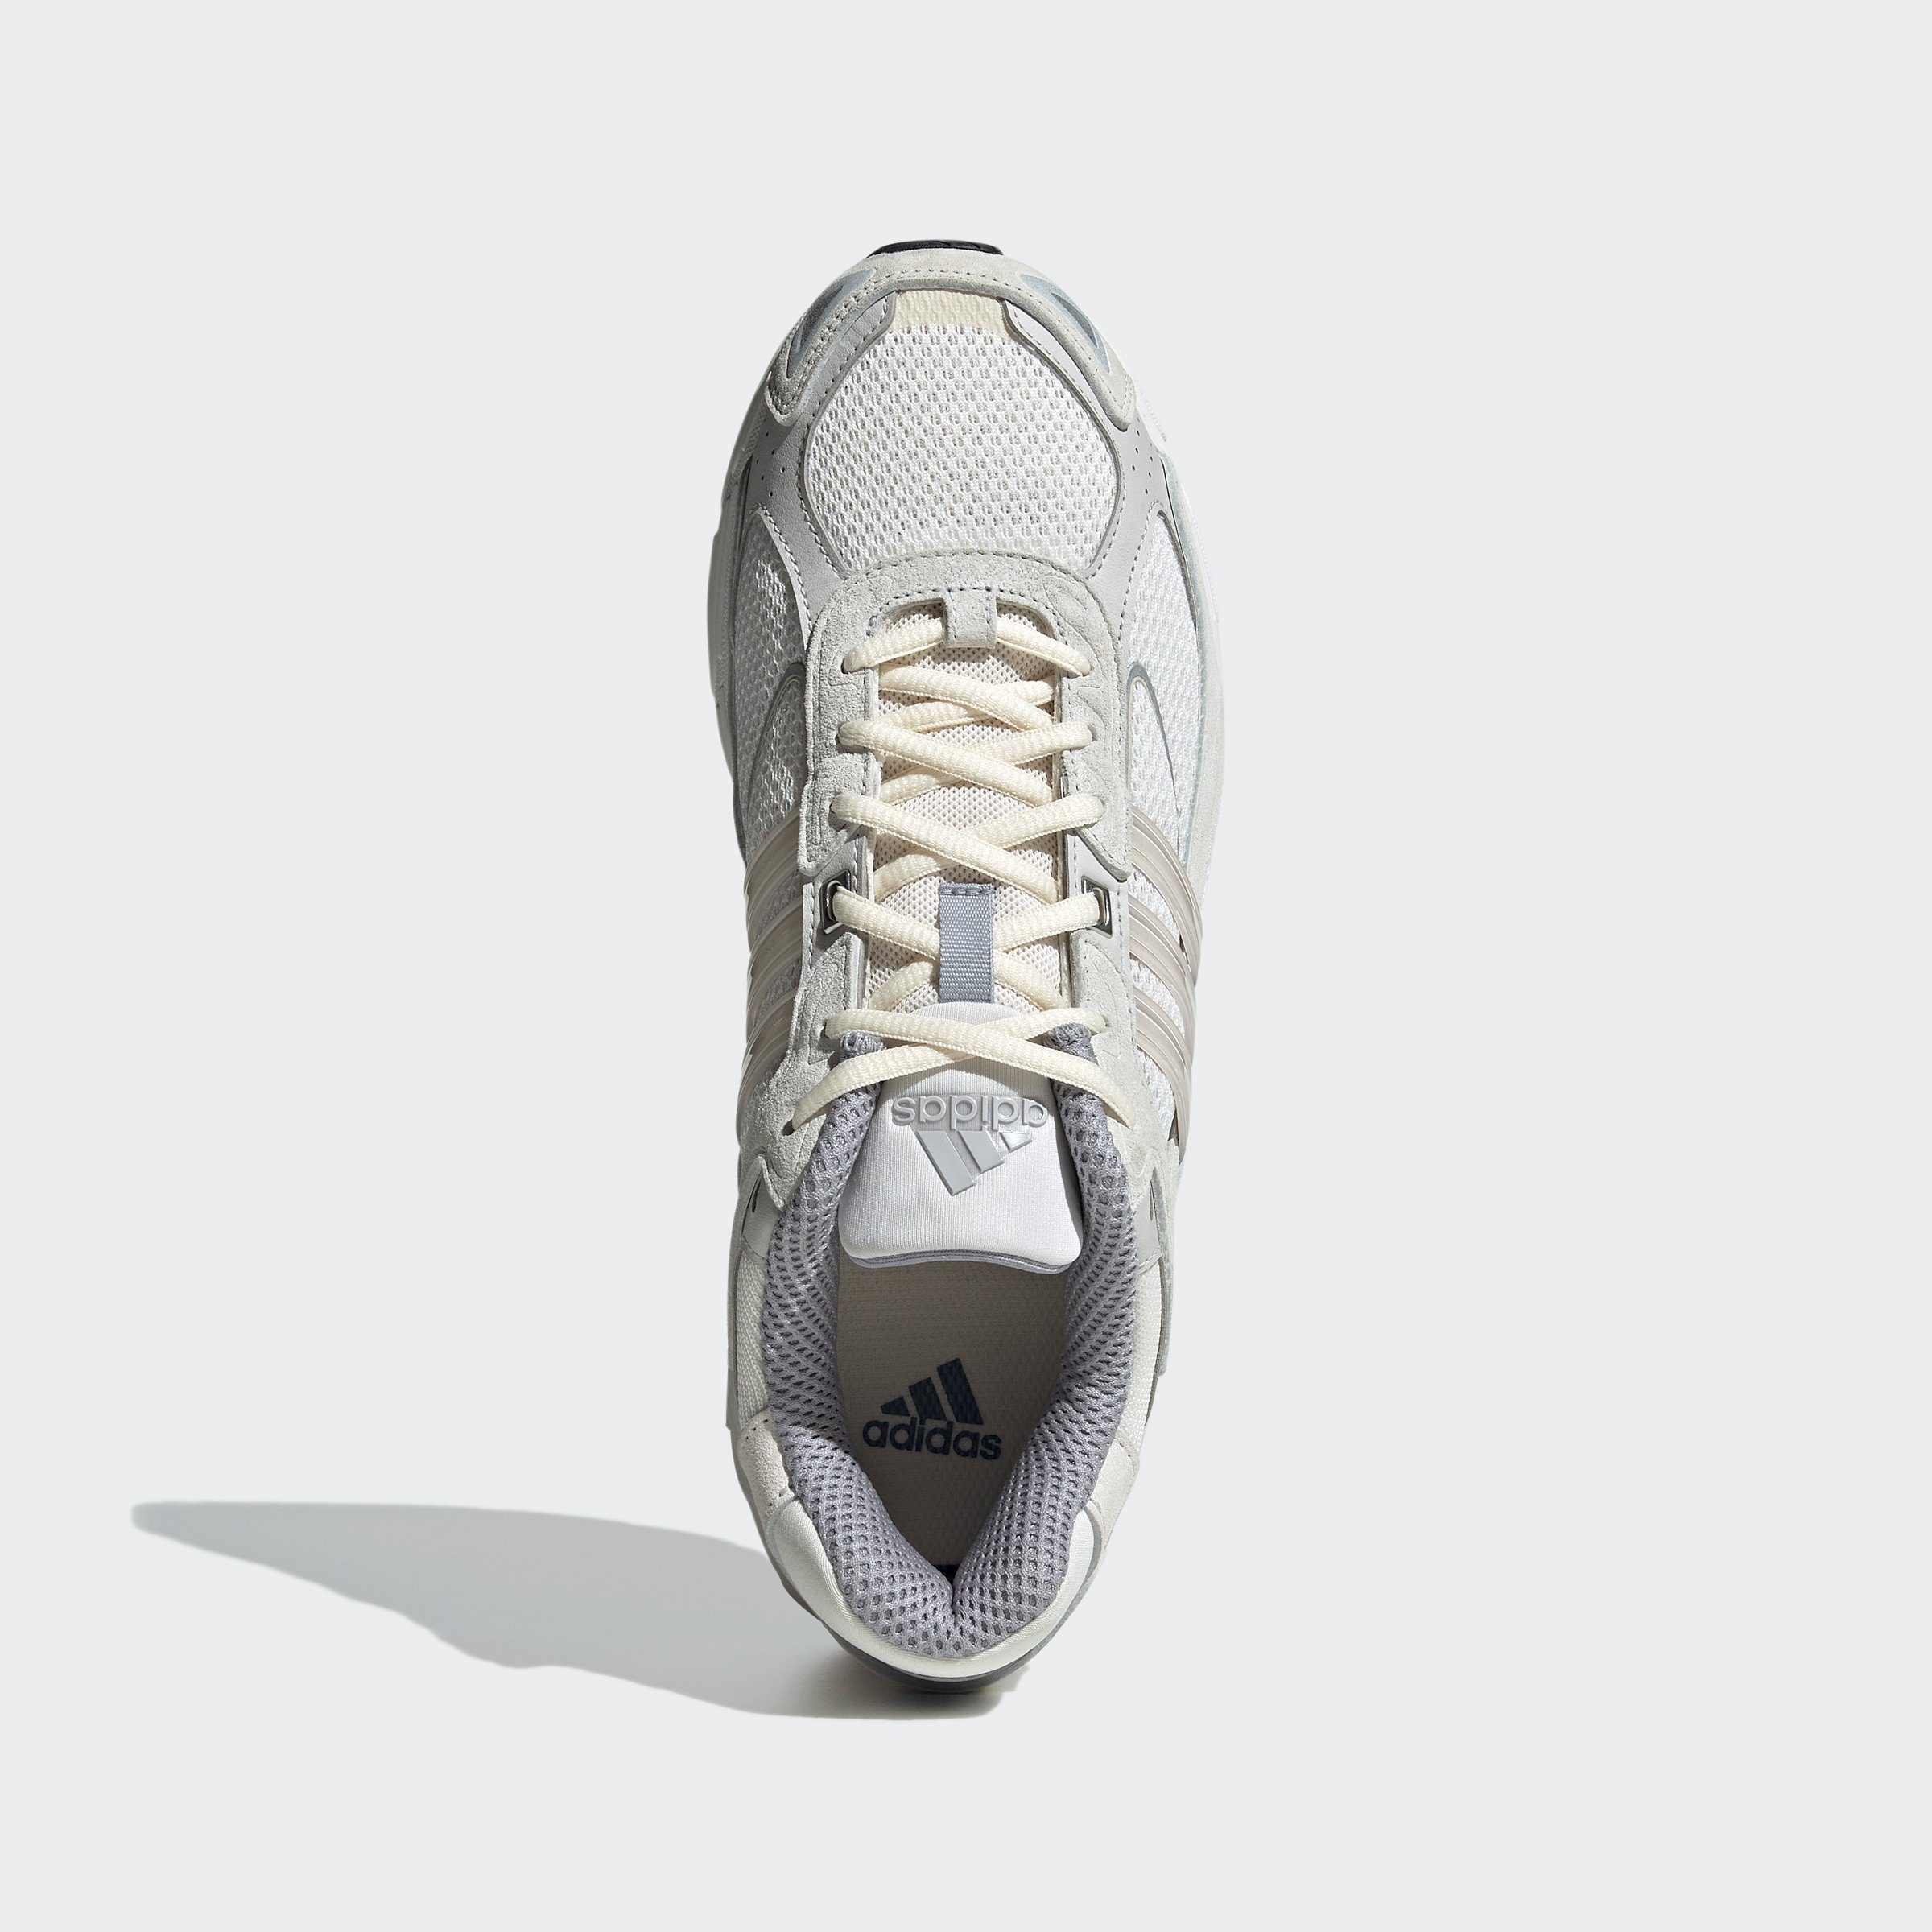 RESPONSE / Originals Crystal Wonder White White Sneaker White / CL Crystal adidas